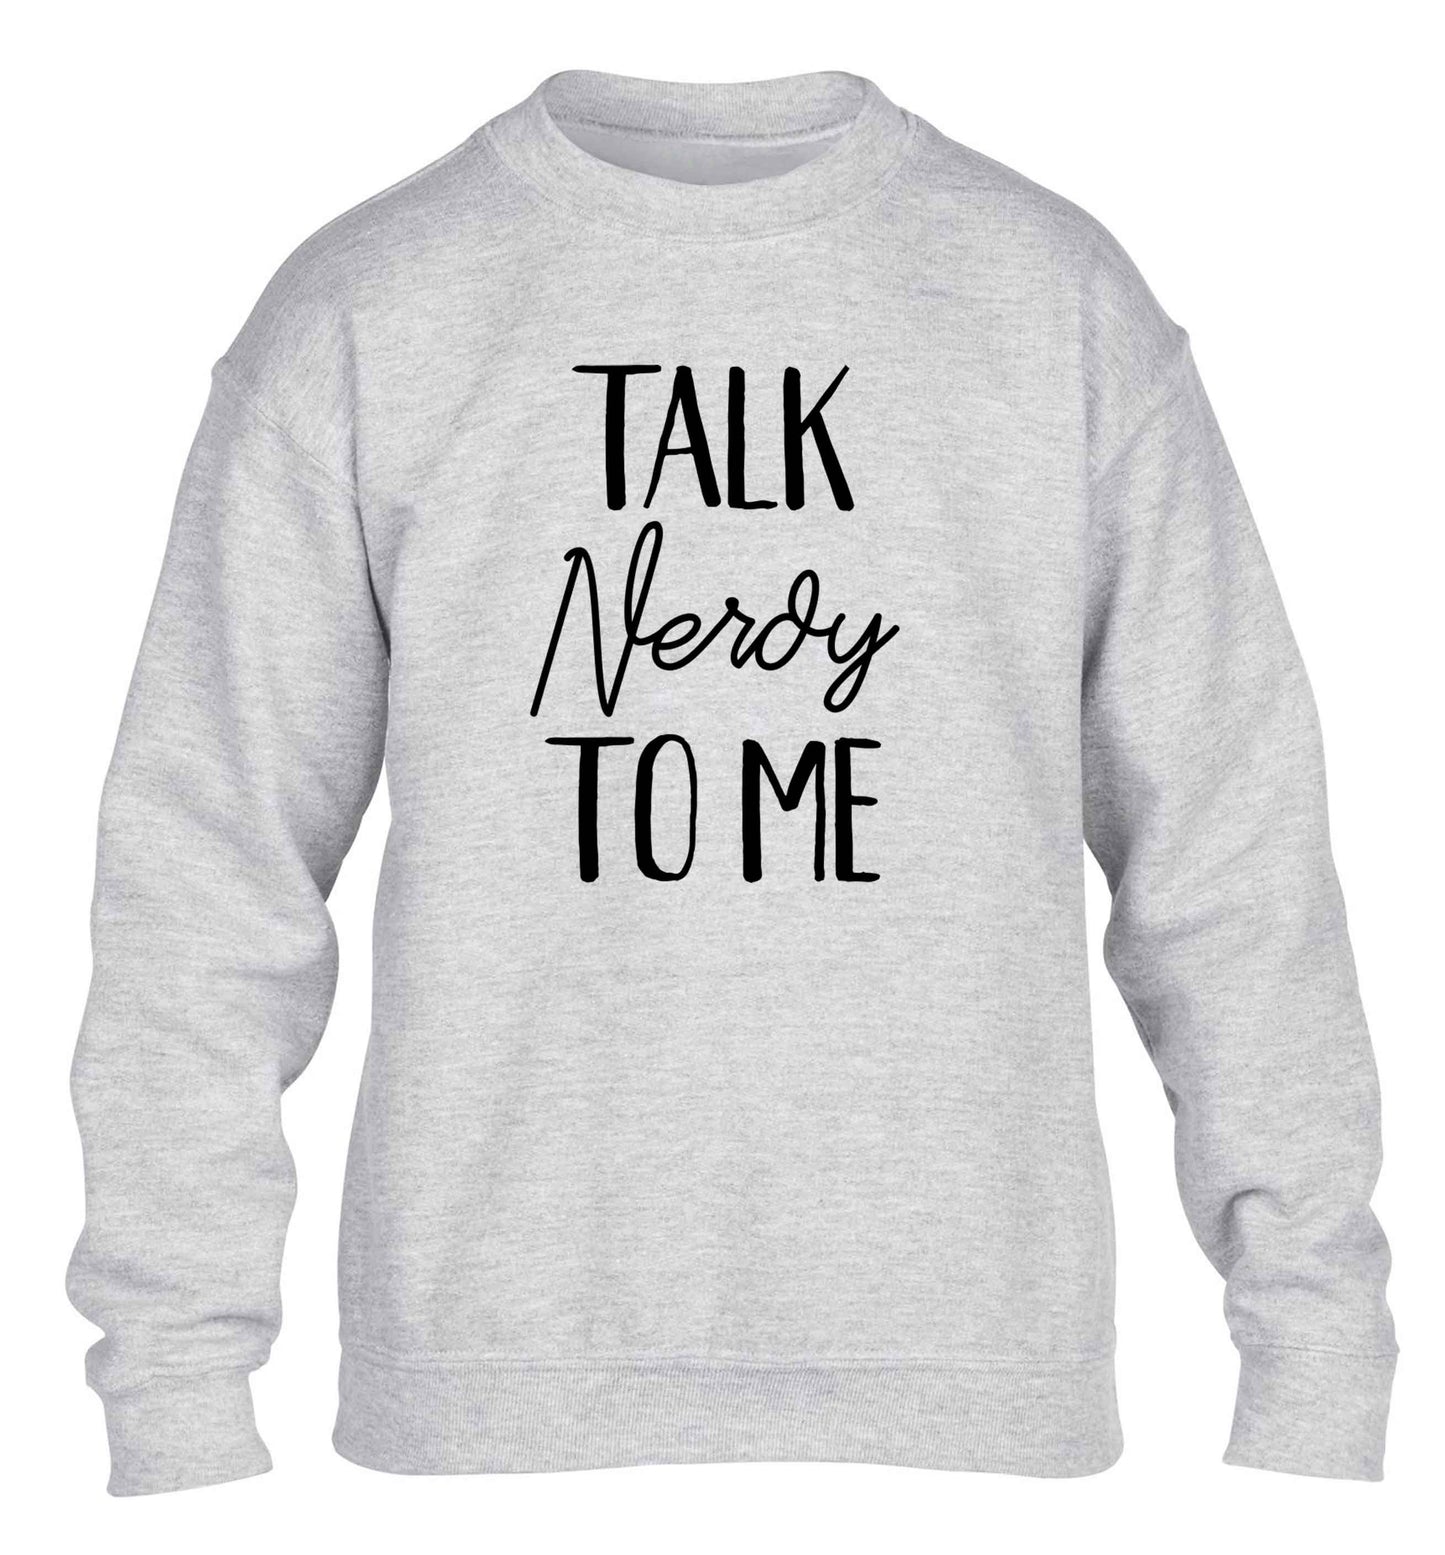 Talk nerdy to me children's grey sweater 12-13 Years